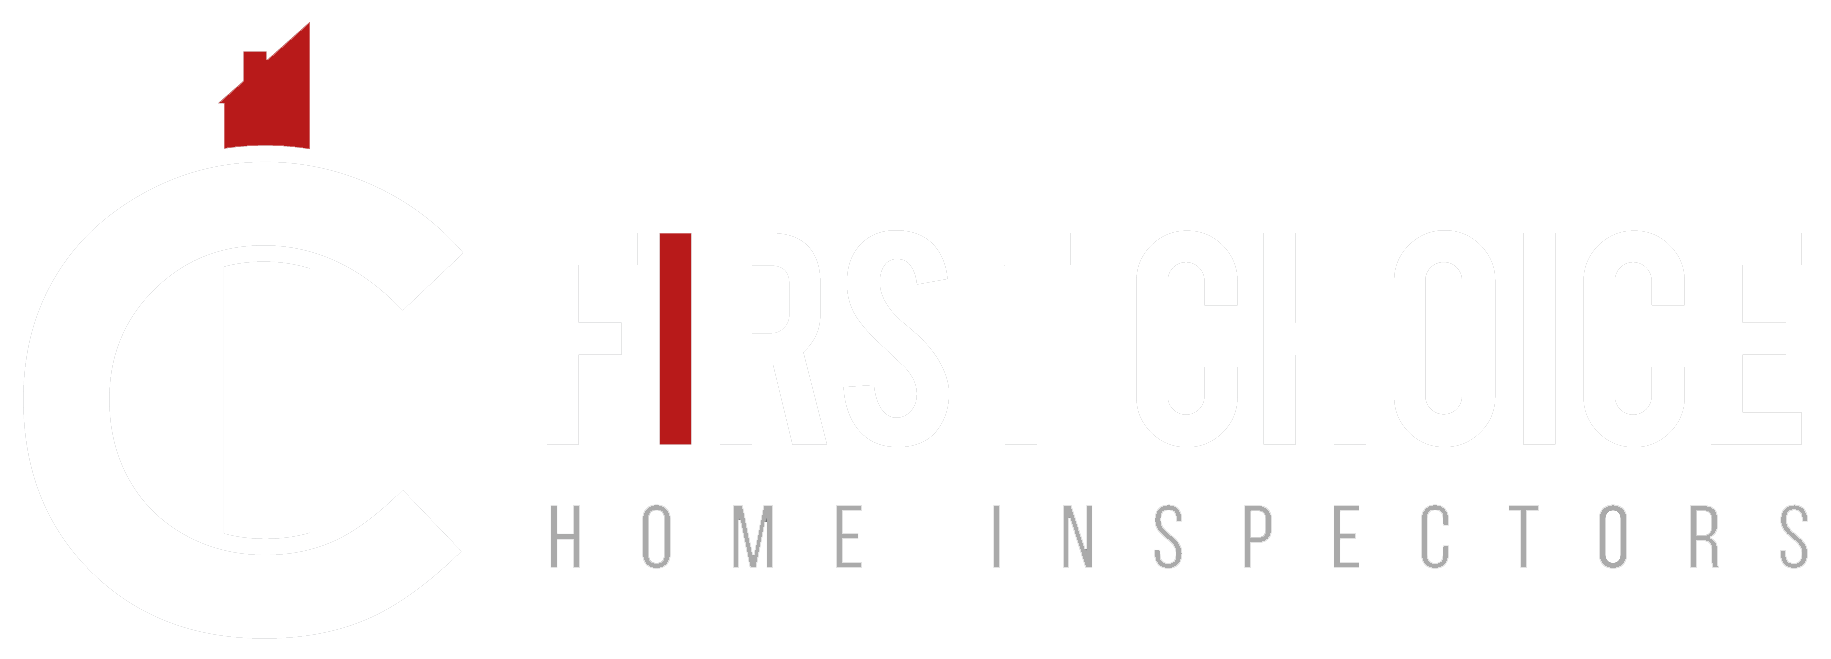 First Choice Home Inspectors LLC